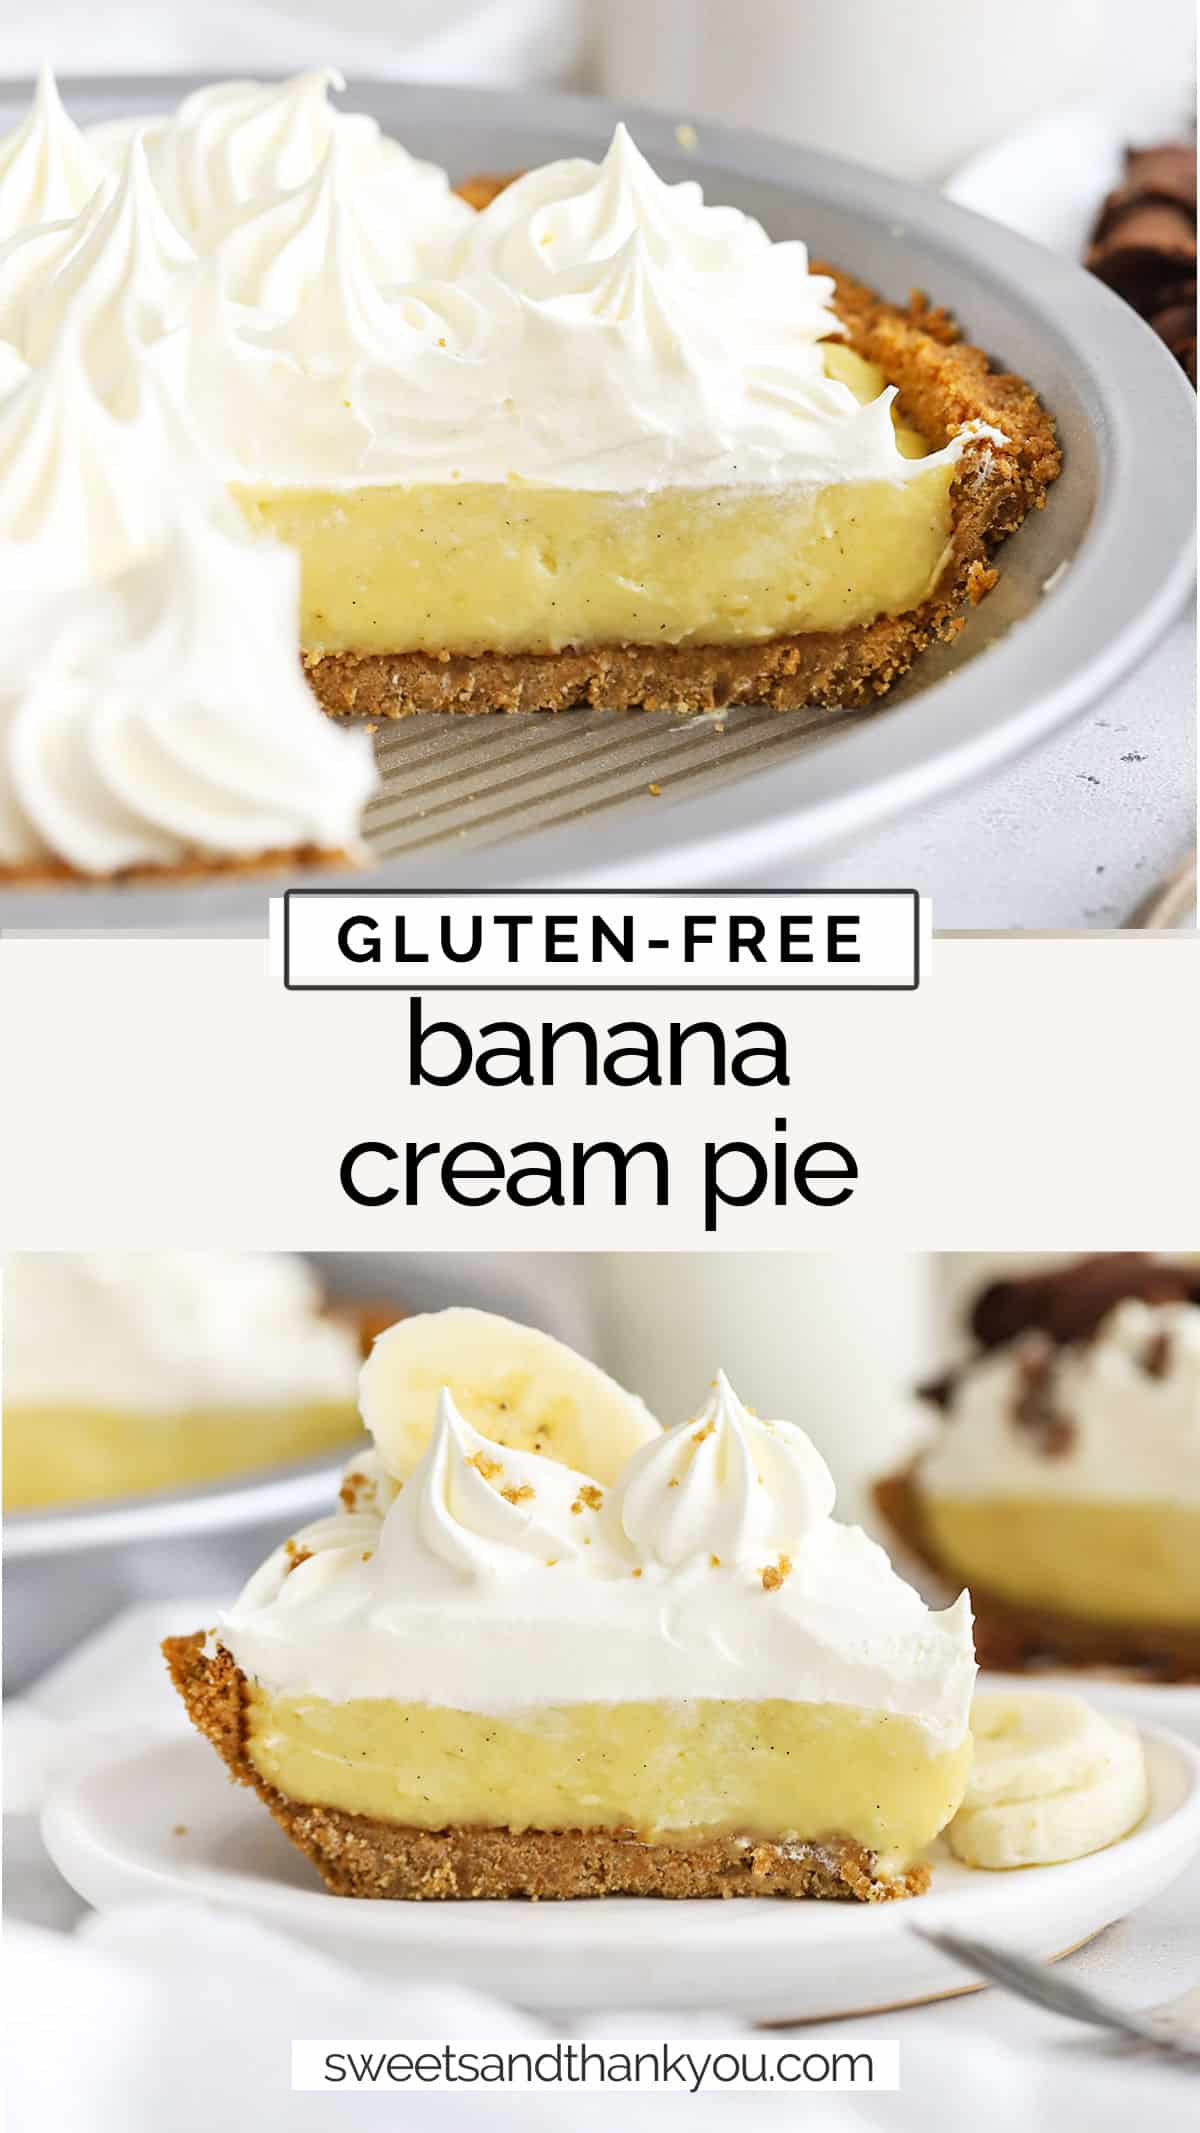 Gluten-Free Banana Cream Pie With Graham Crust - Our gluten-free banana cream pie recipe uses an easy trick to majorly turn up the flavor! / gluten-free banana pie recipe //gluten-free pie recipe / gluten-free cream pie / gluten-free pie with graham cracker crust / easy gluten-free pie recipe / gluten-free thanksgiving dessert / gluten-free banana pudding pie / gluten-free pudding pie recipe / gluten-free banana cream pie from scratch / gluten-free banana cream pie no pudding